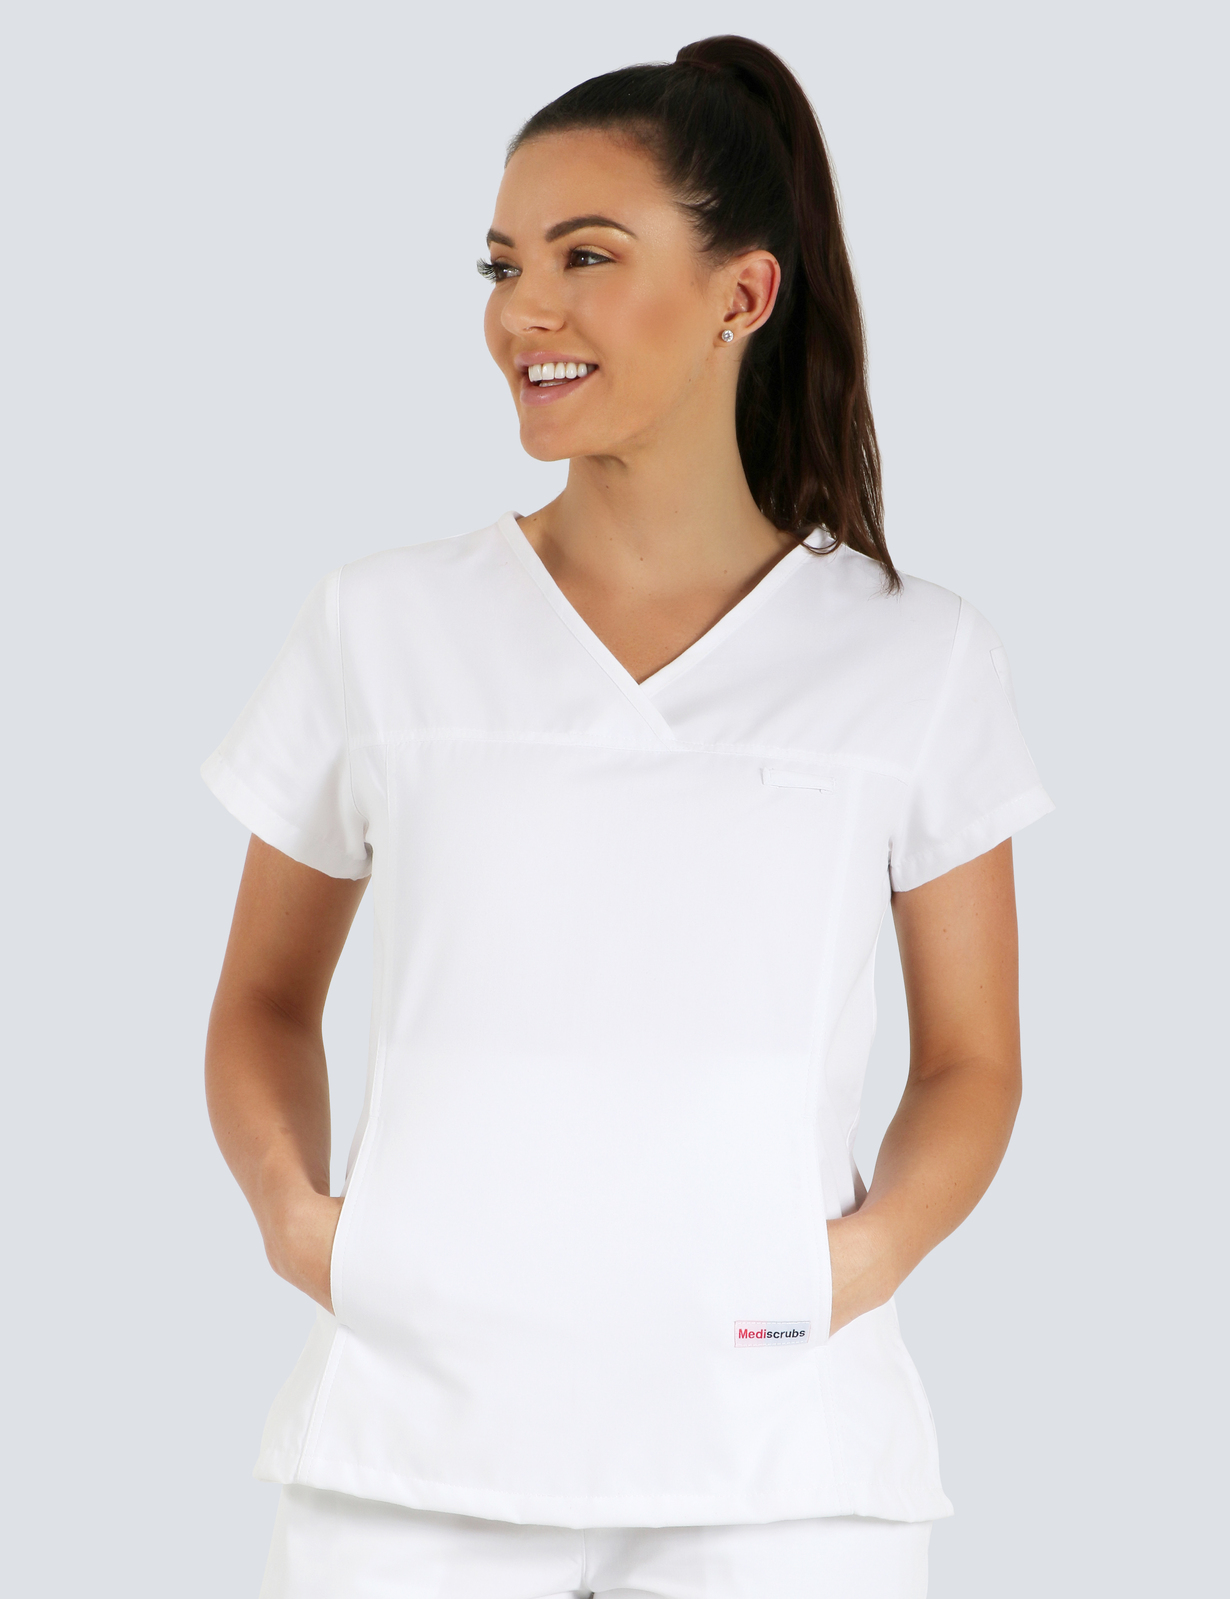 Queensland Children's Hospital Emergency Department Assistant Nurse Unit Manager Uniform Top Bundle  (Women's Fit Top in White incl Logos)